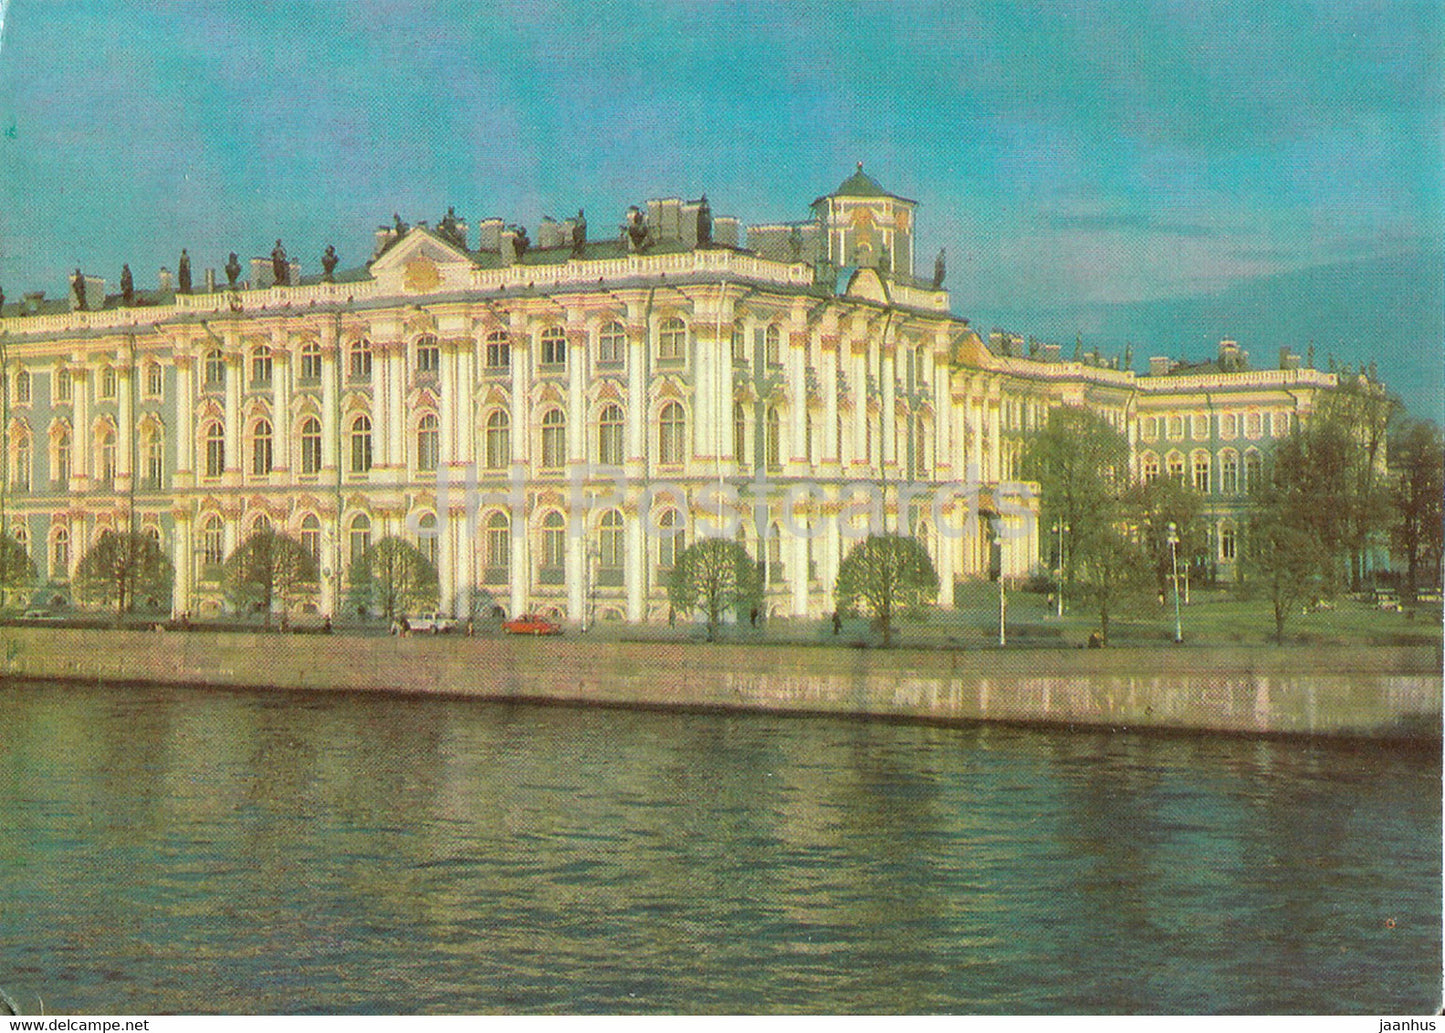 Leningrad - St Petersburg - Winter Palace - State Hermitage Museum - postal stationery - 1 - 1991 - Russia USSR - unused - JH Postcards